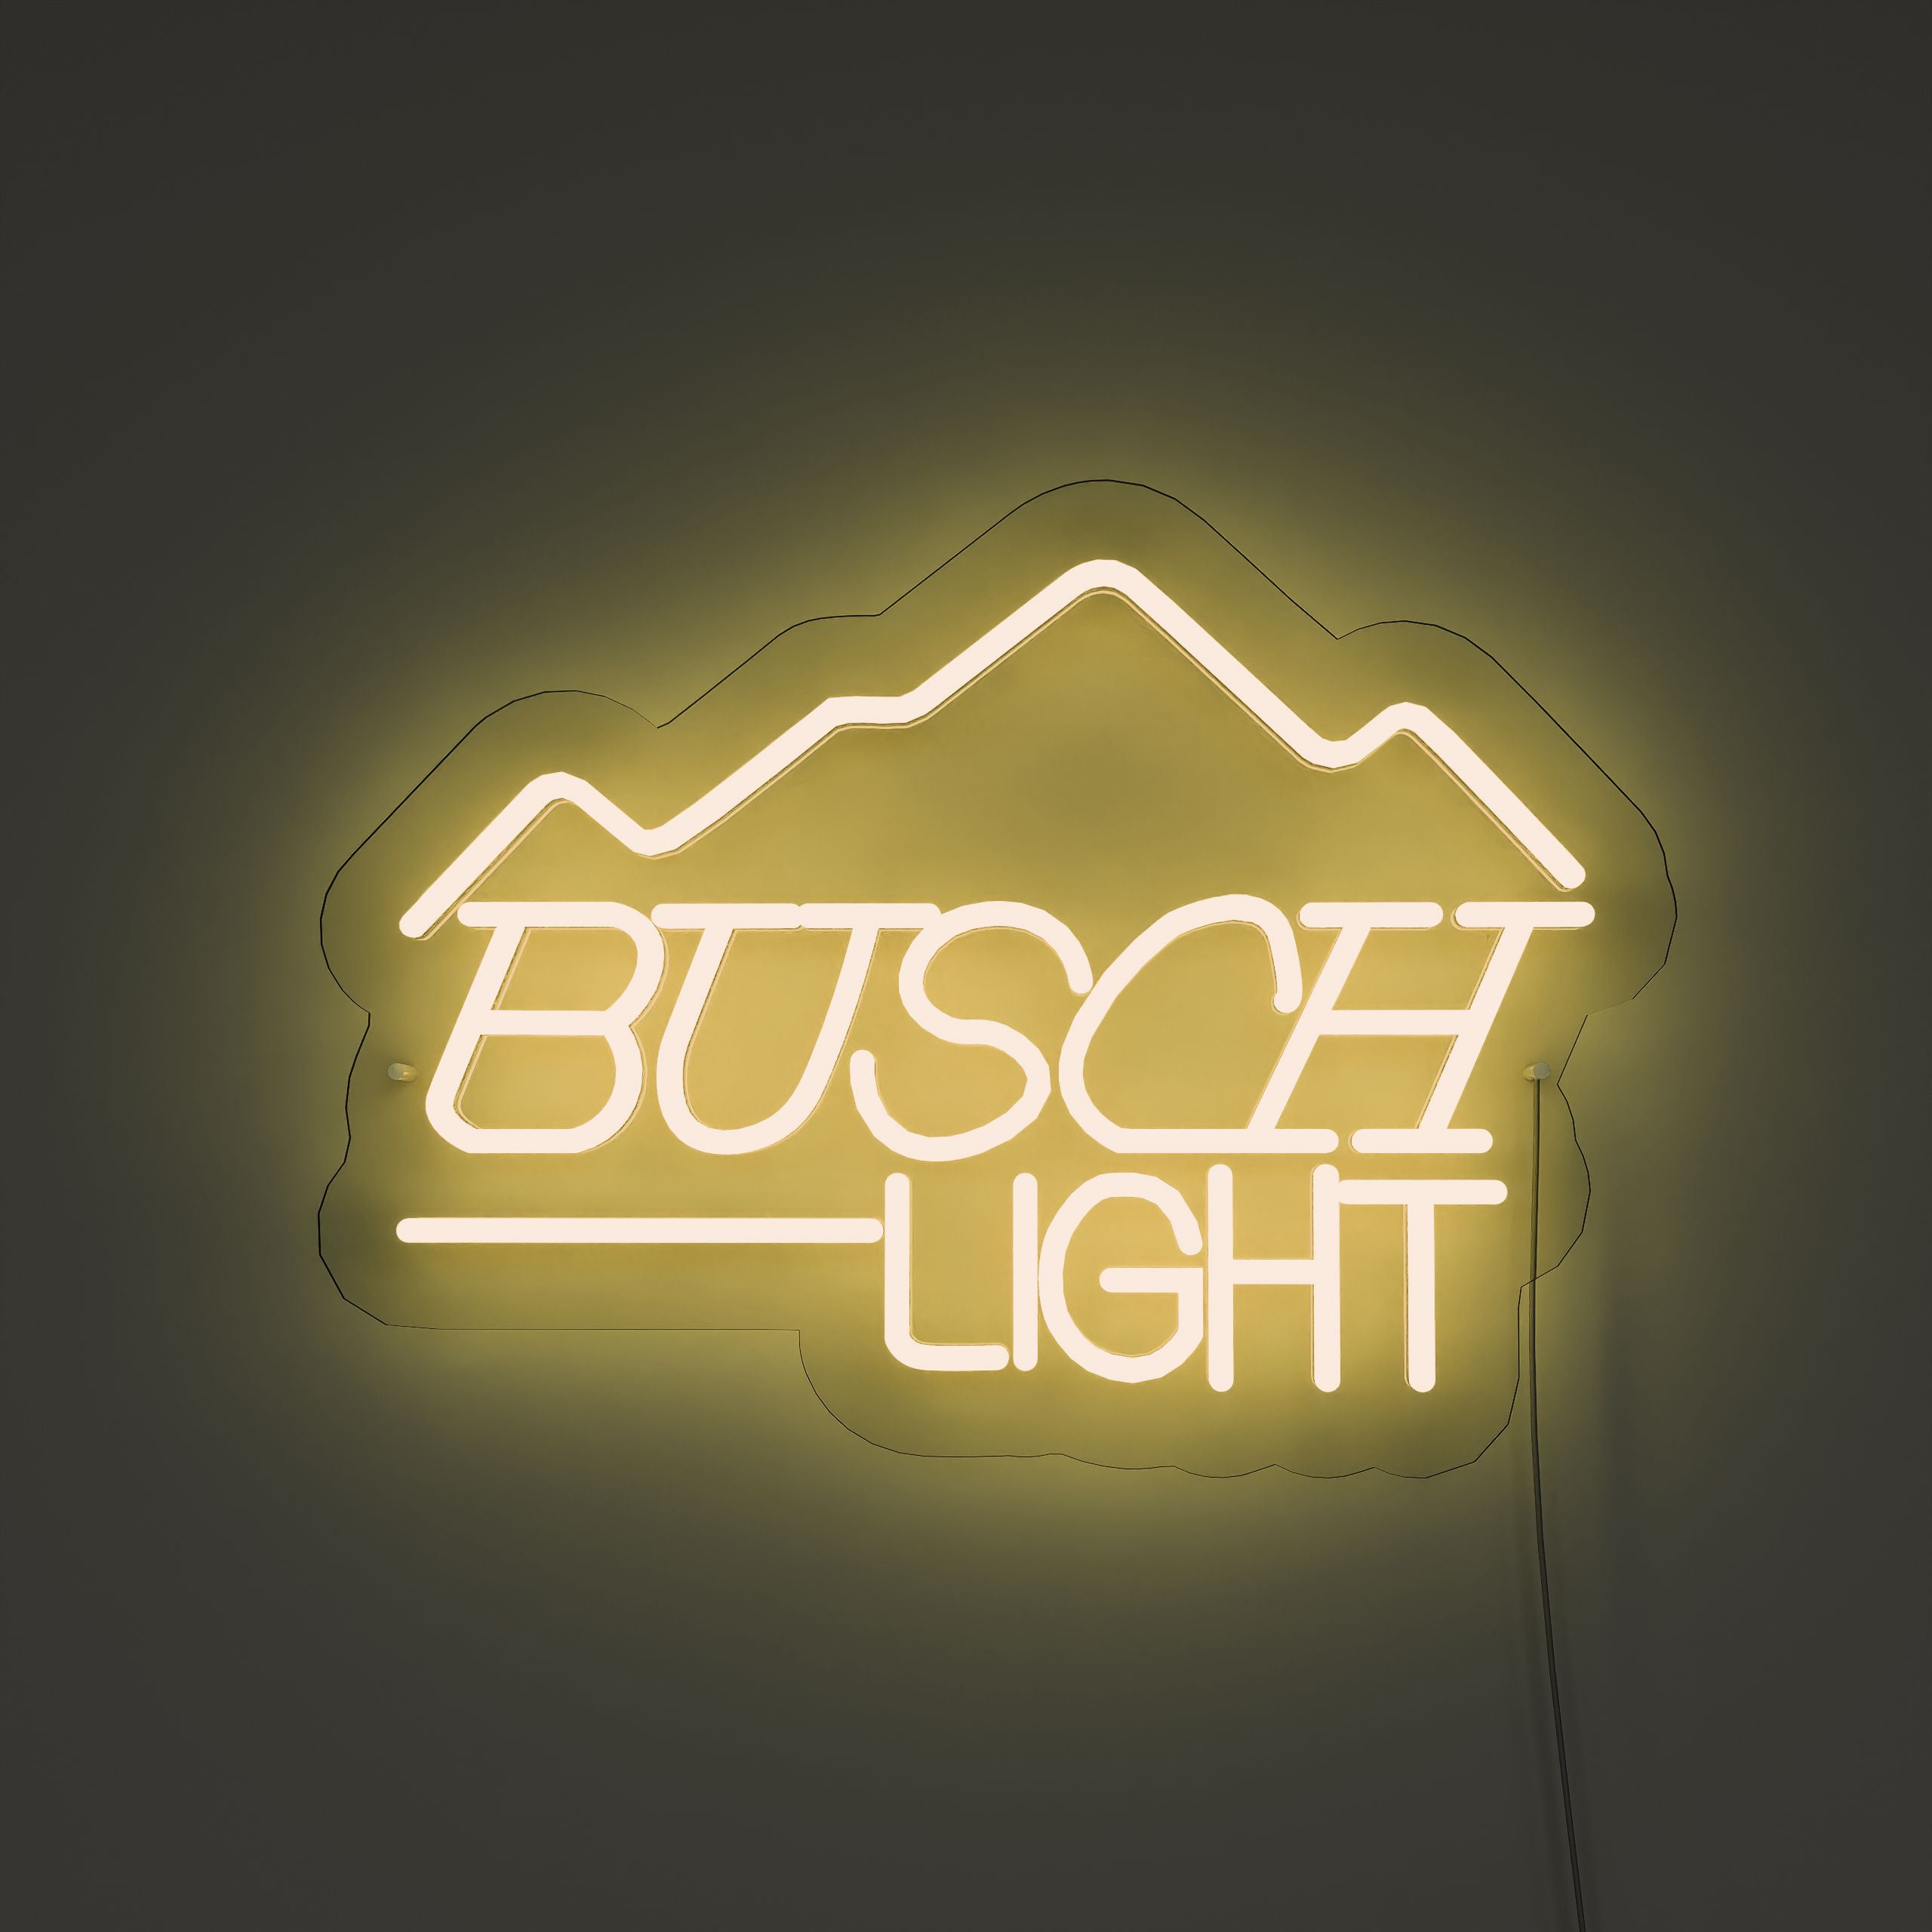 fbusch-light-neon-signs-Gold-Neon-sign-Lite